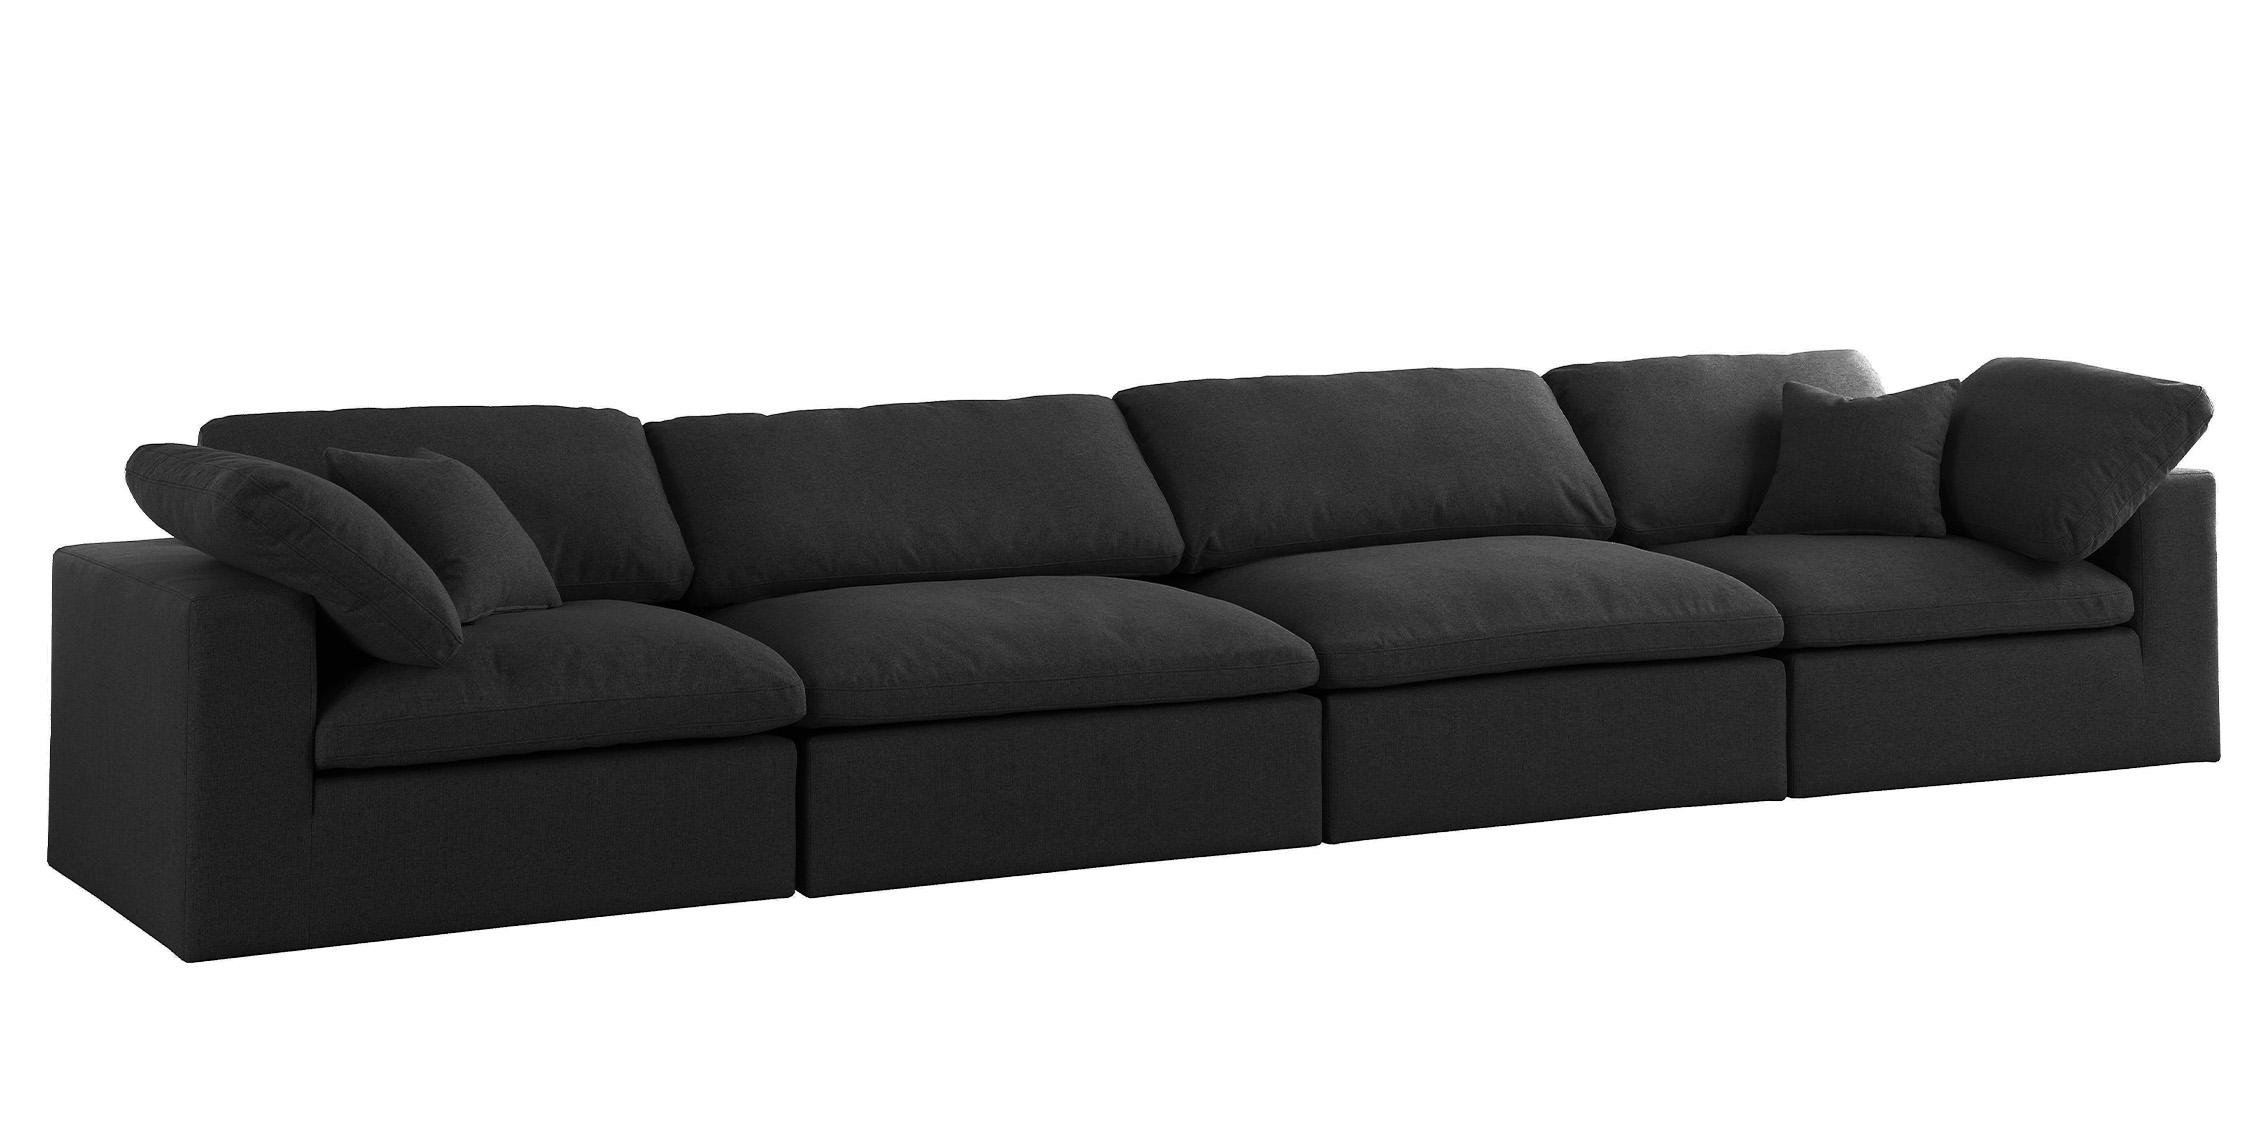 

    
Serene Black Linen Textured Fabric Deluxe Comfort Modular Armless Sofa S158 Meridian
